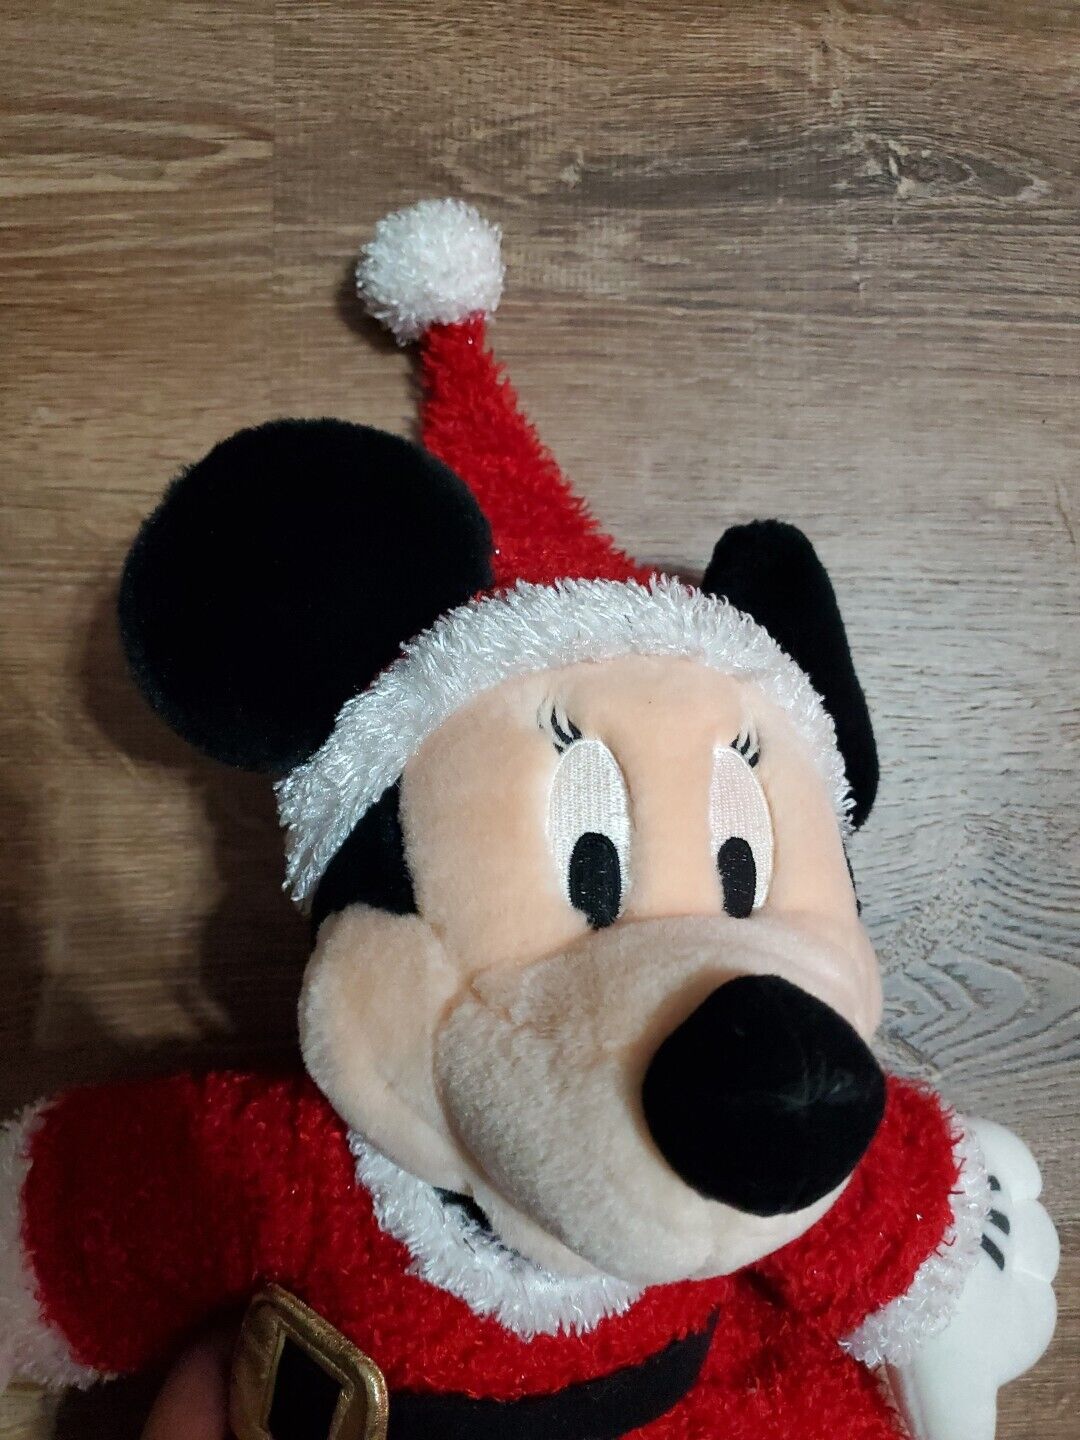 Disney Store Santa Claus Minnie Mouse 17” Plush Stuffed Animal Christmas